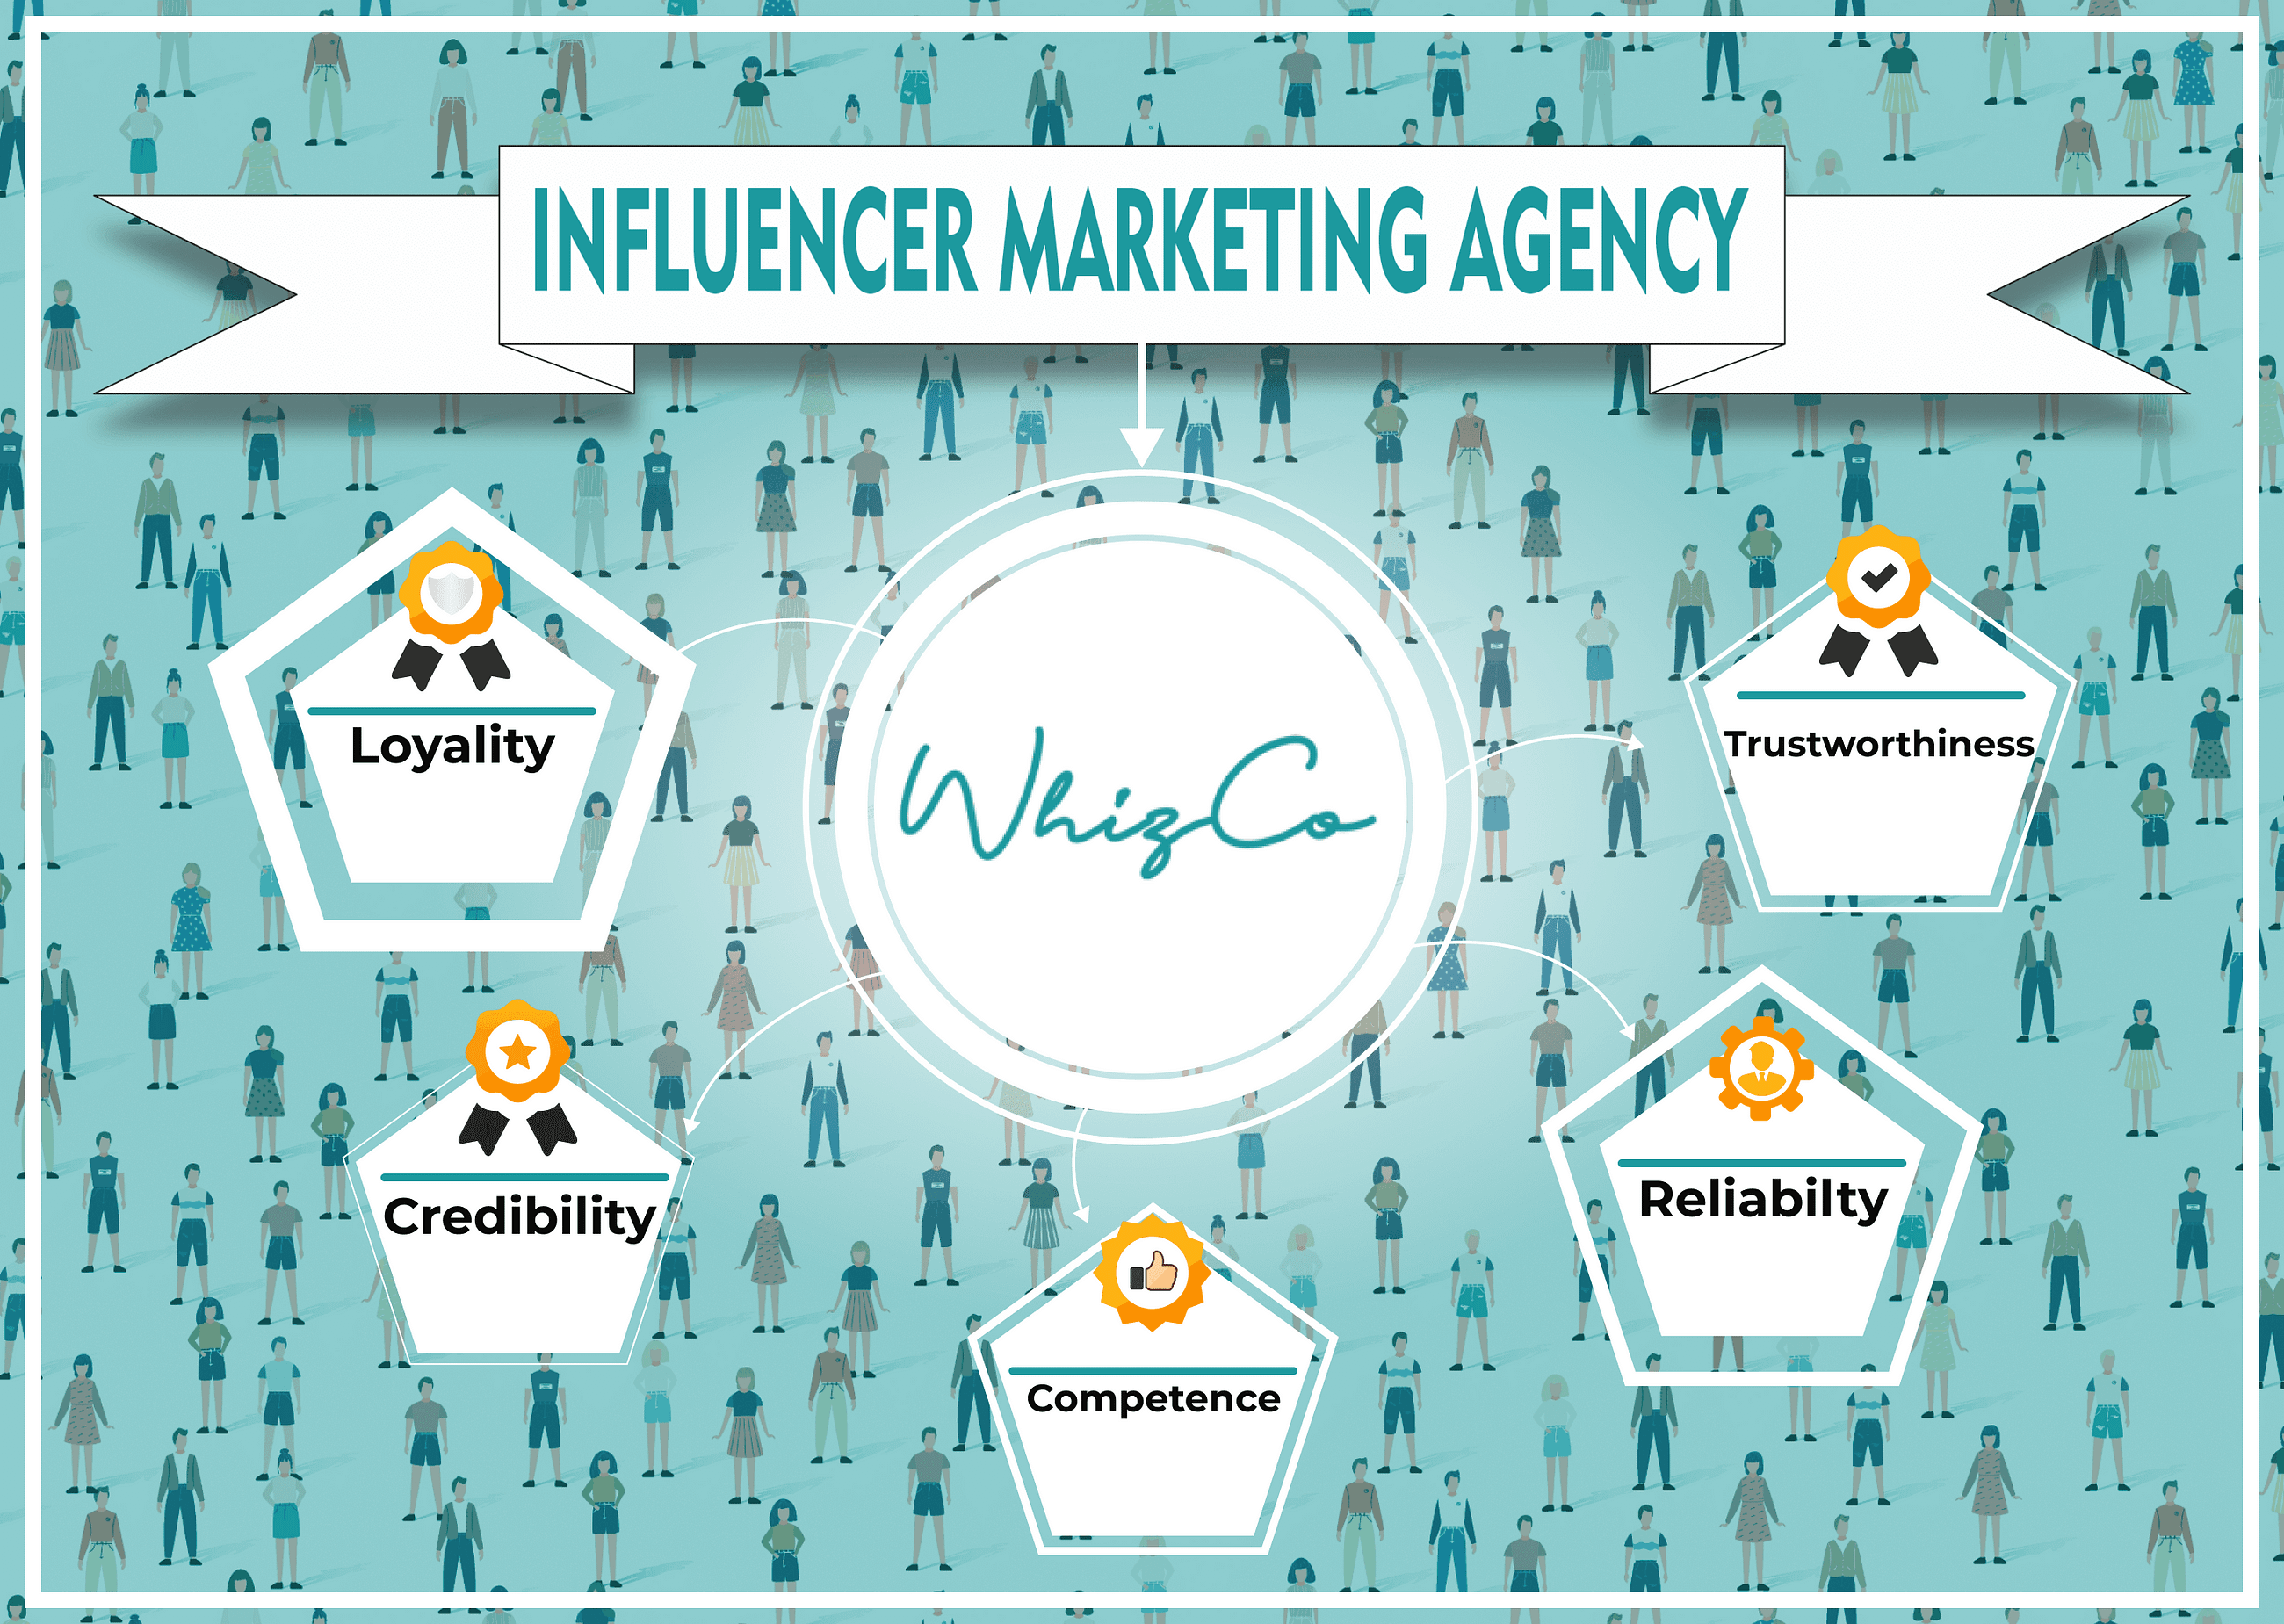 Influencer Marketing Agency- Whizco